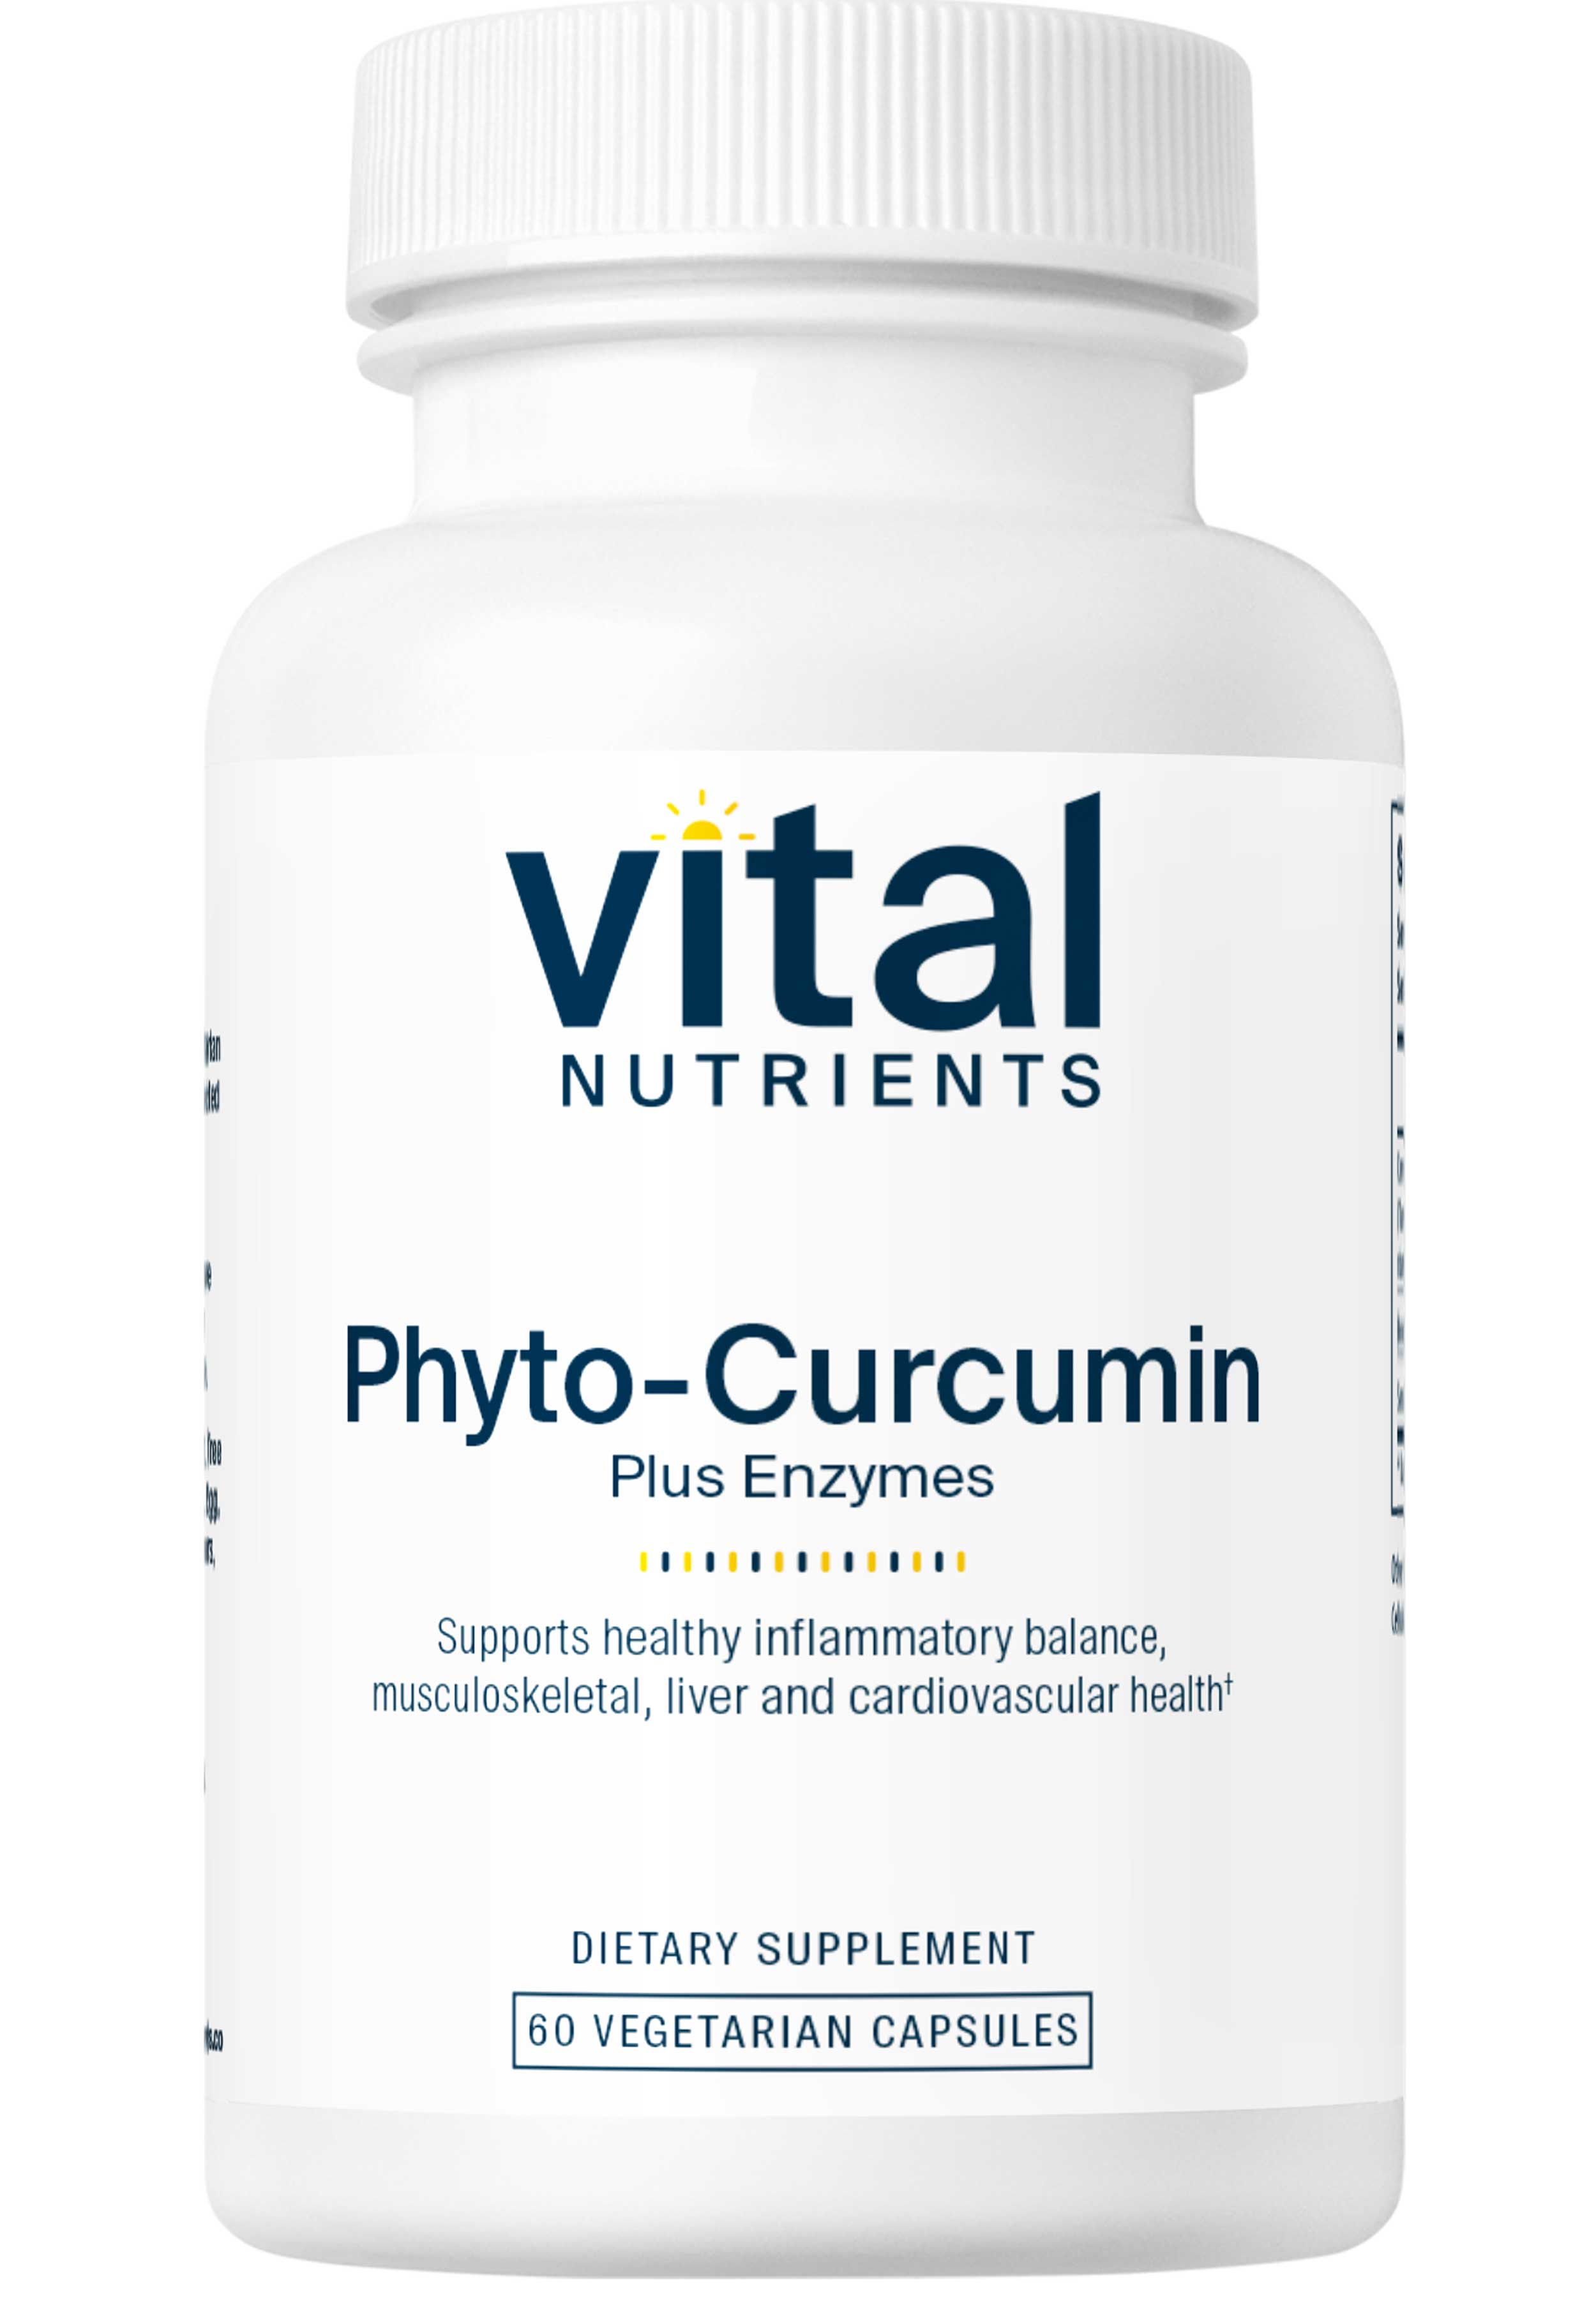 Vital Nutrients Phyto-Curcumin Plus Enzymes